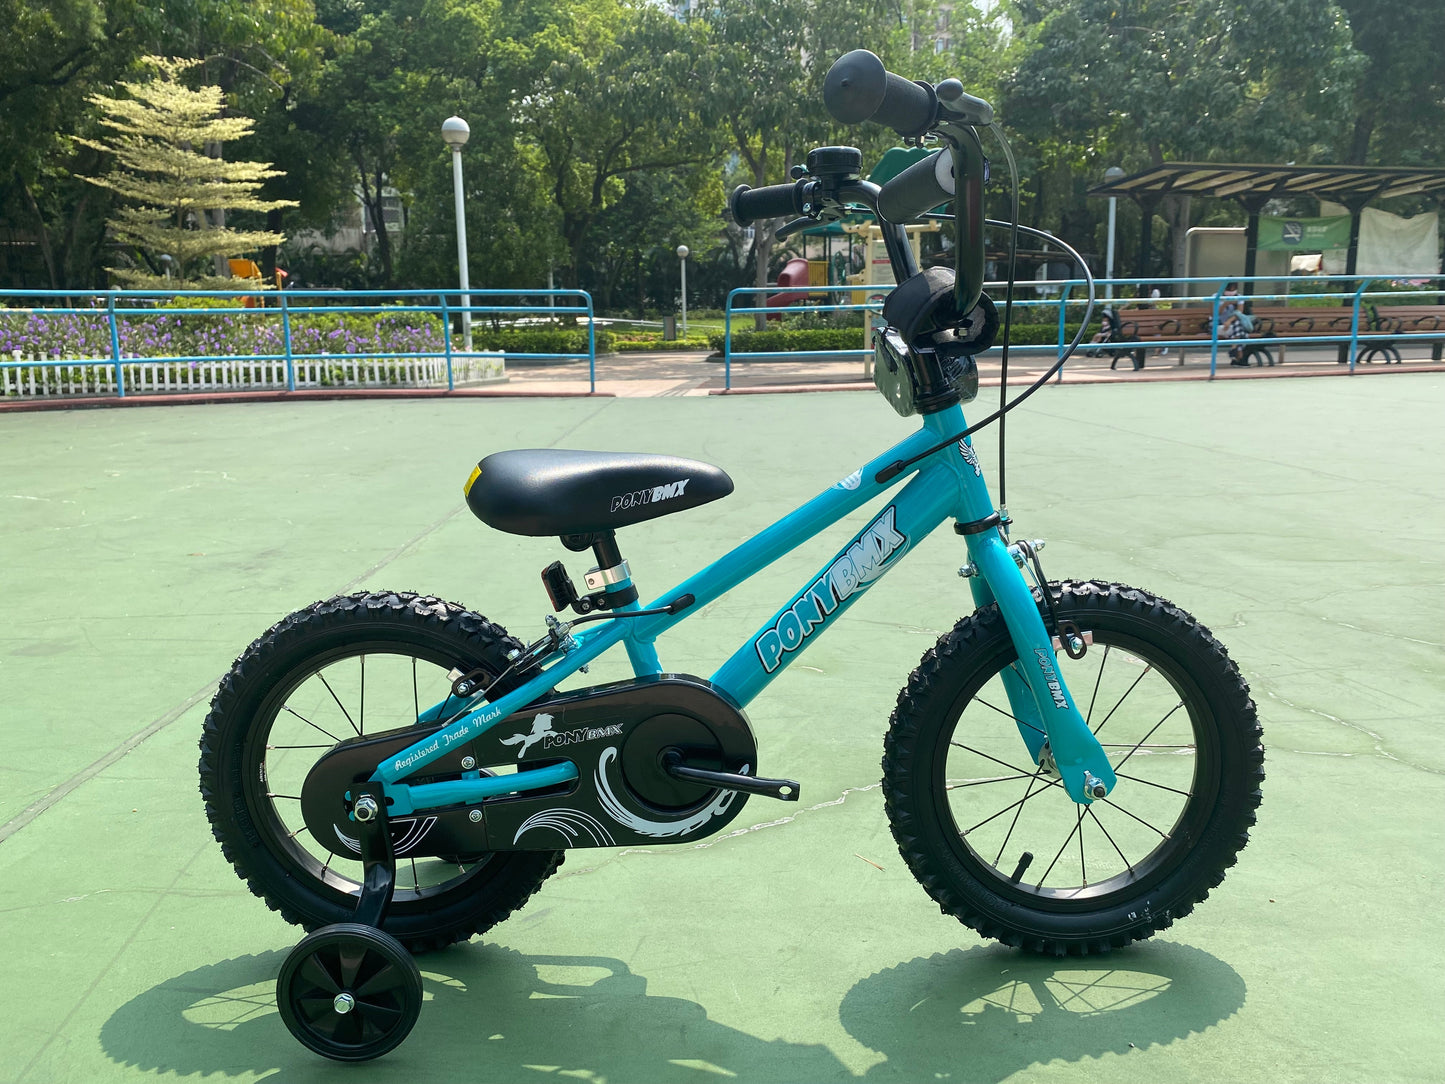 PONY new ST-type child bike - 18" / PONY ST-TYPE KID BIKE - 18"